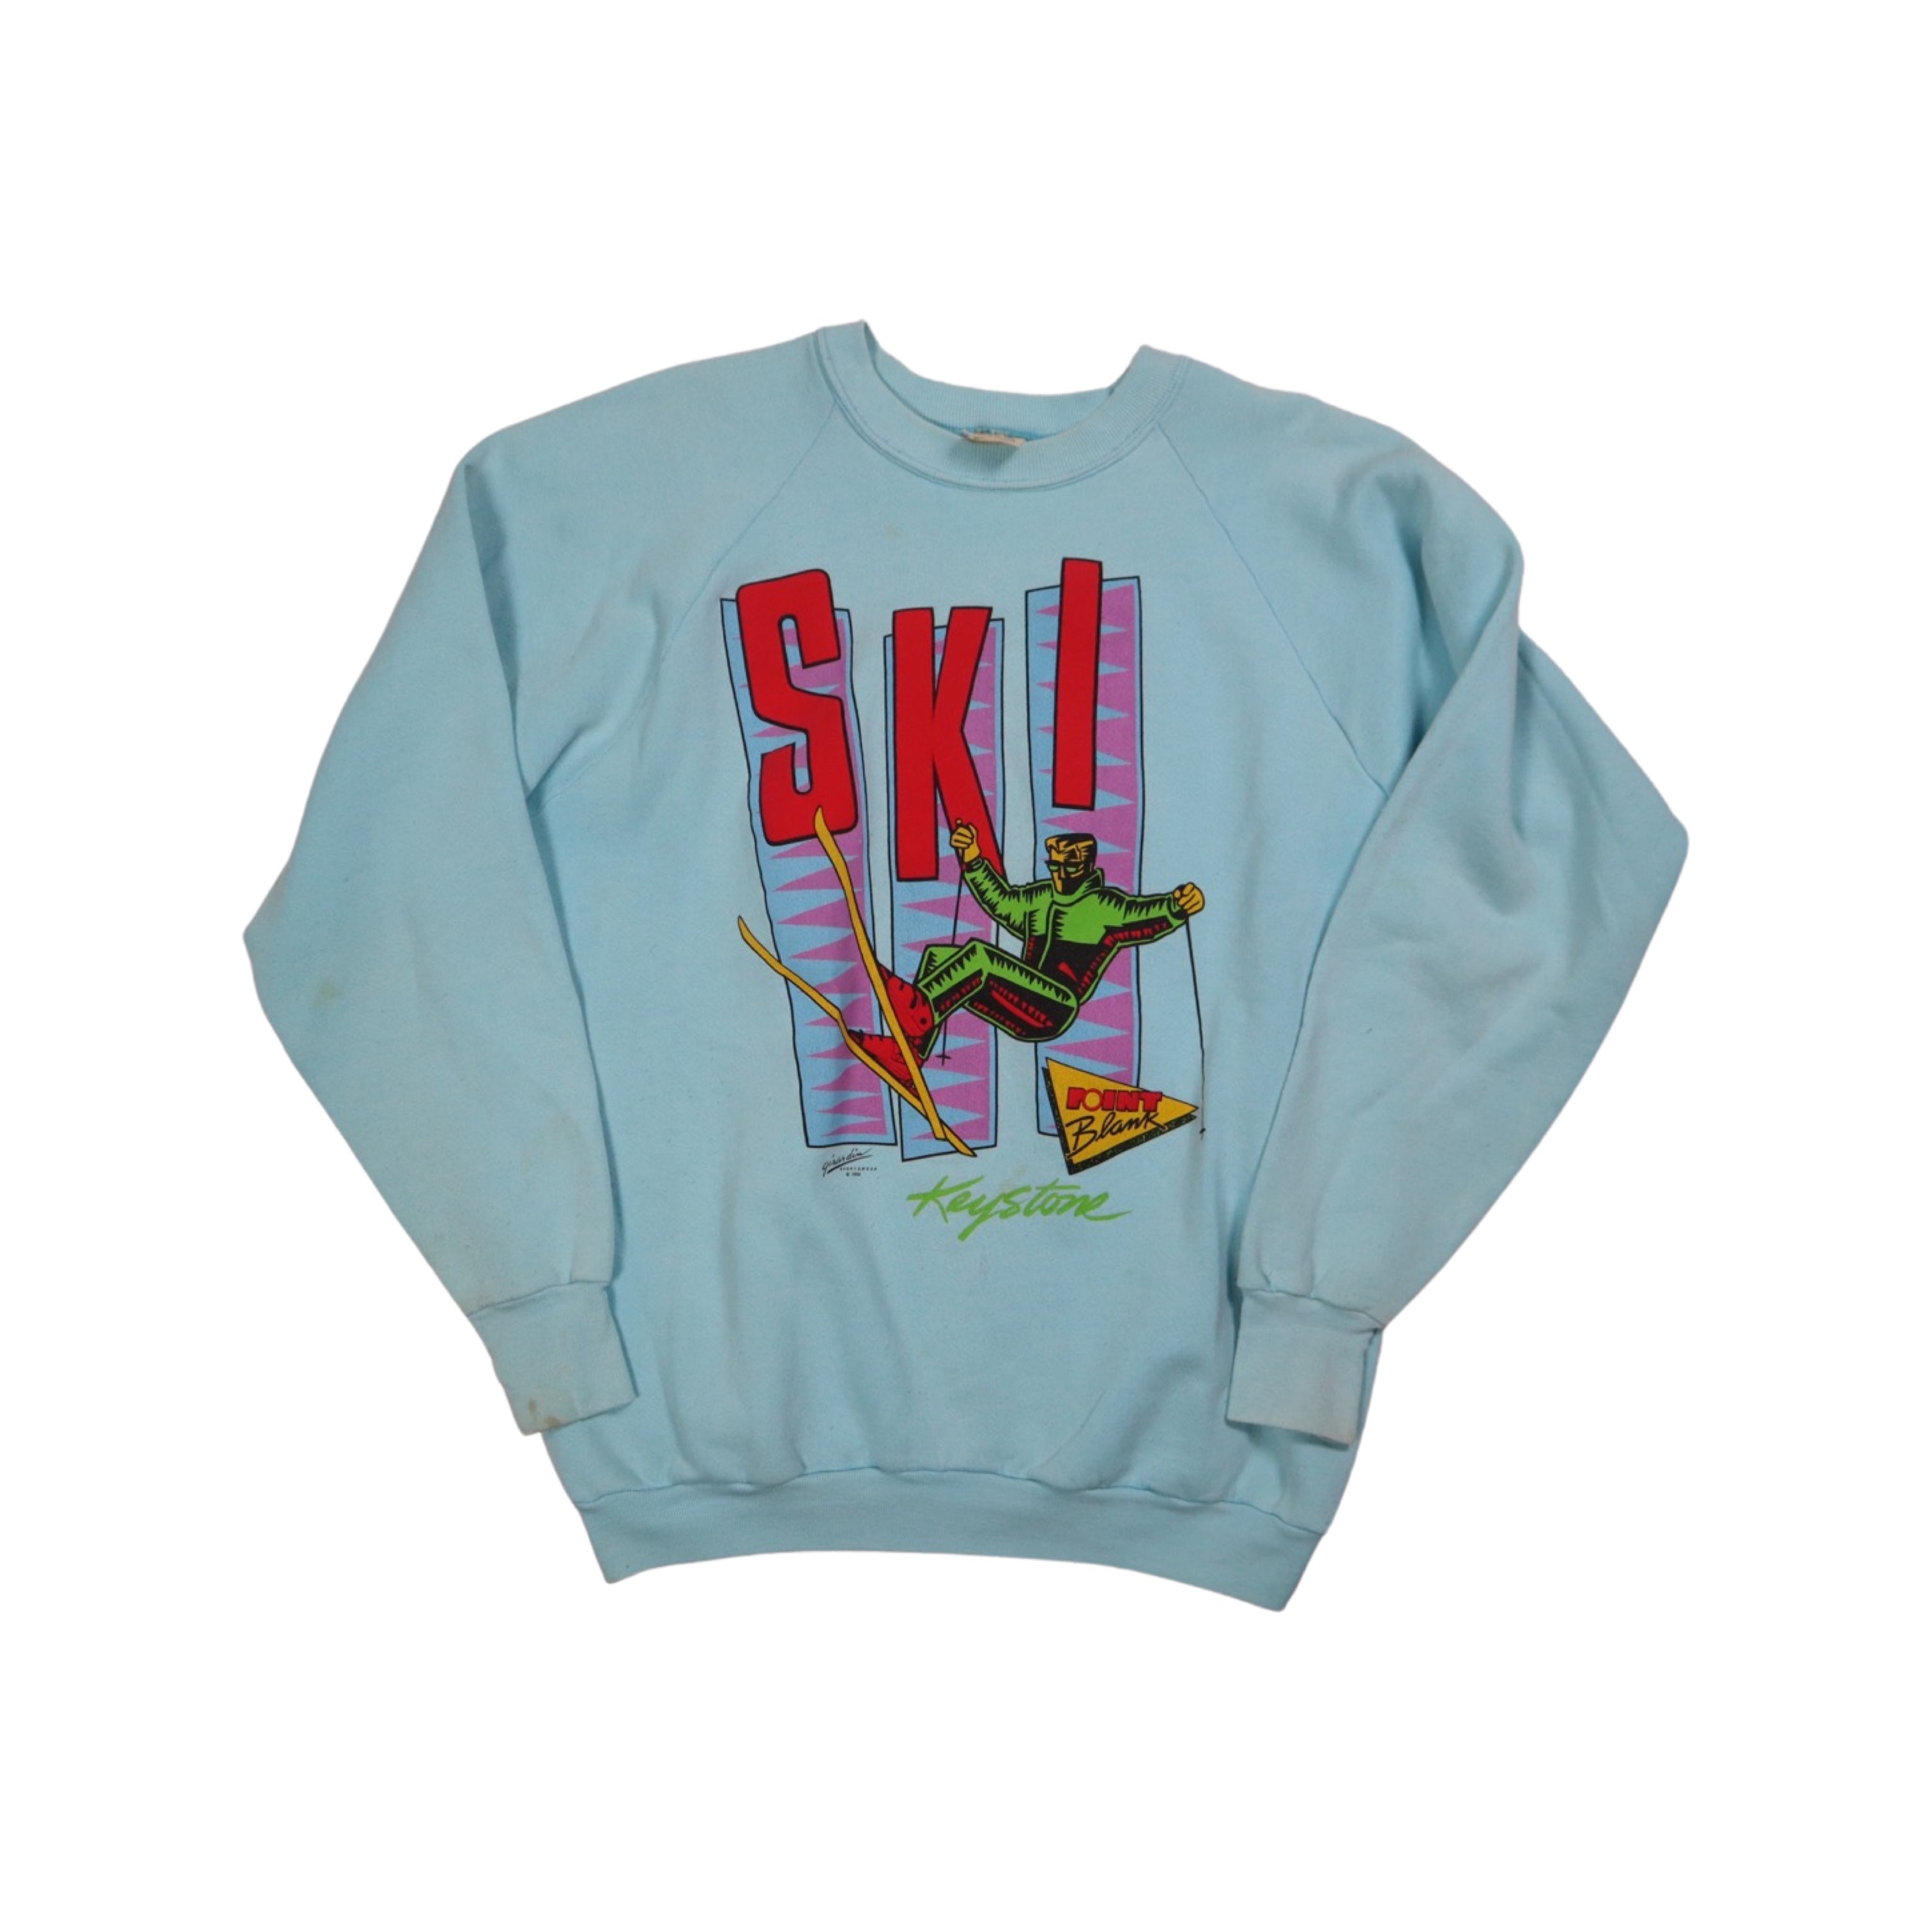 Ski Keystone 1988 Sweater (XL)